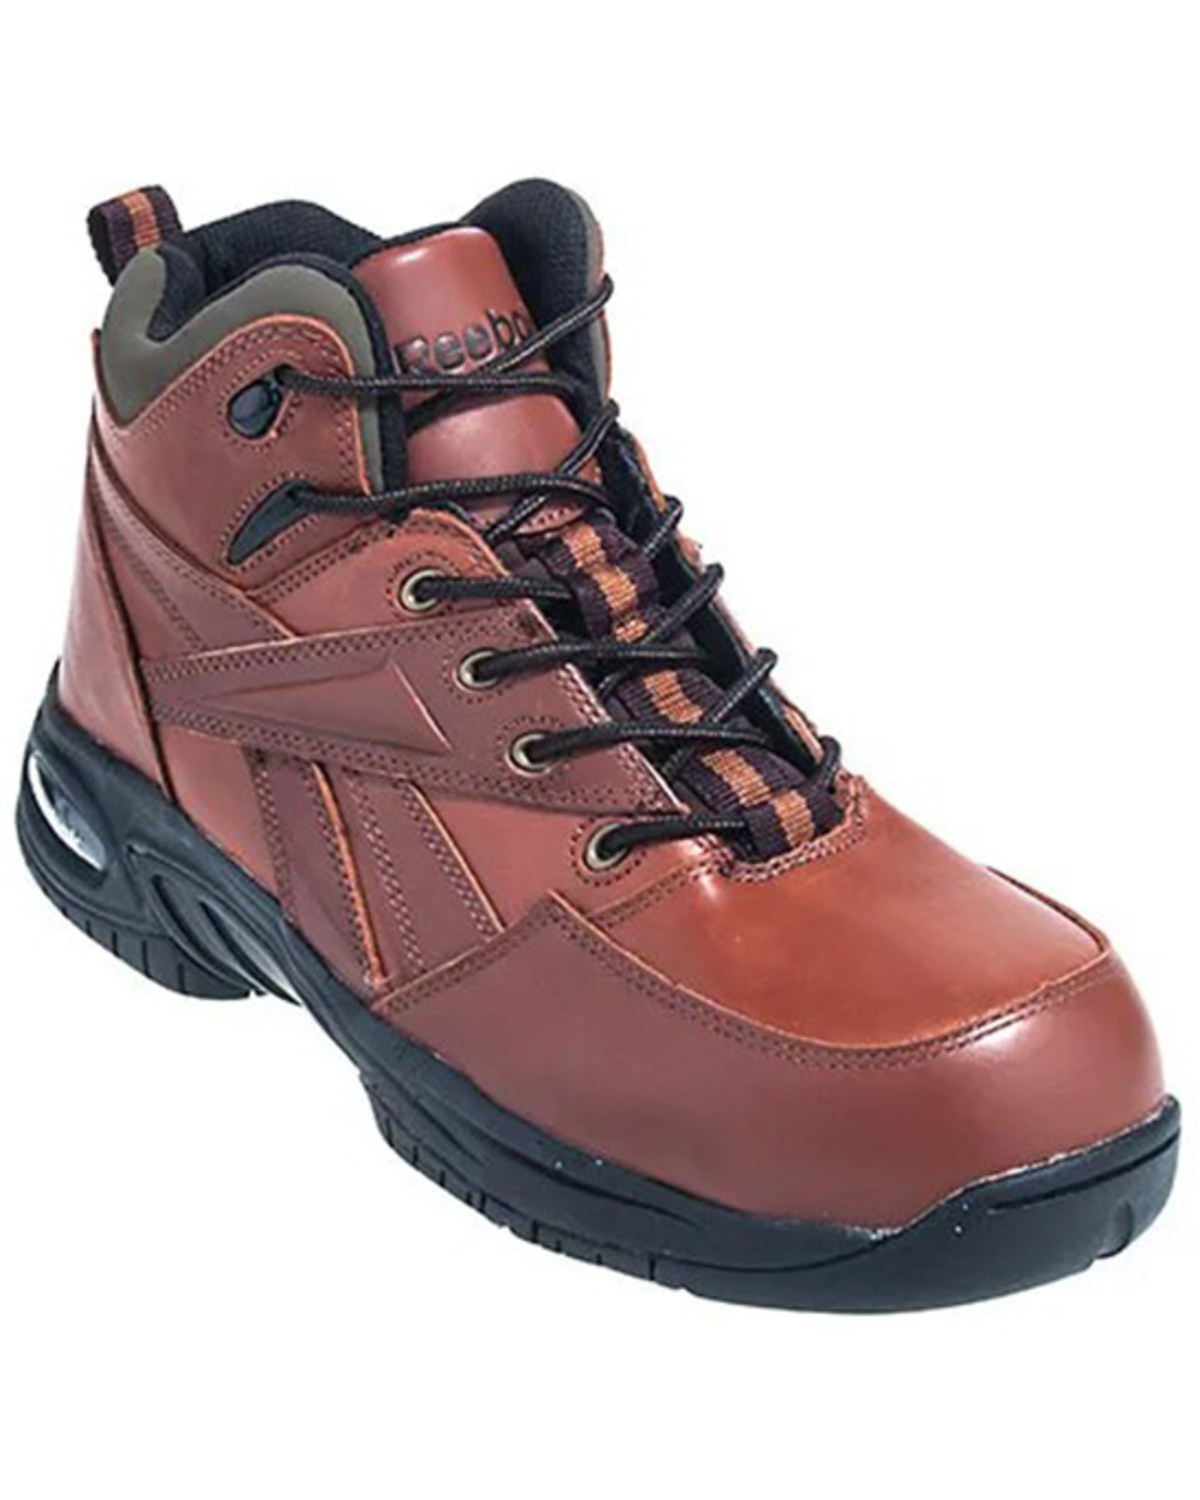 Reebok Men's Tyak Hiker Lace-Up Boots- Composite Toe